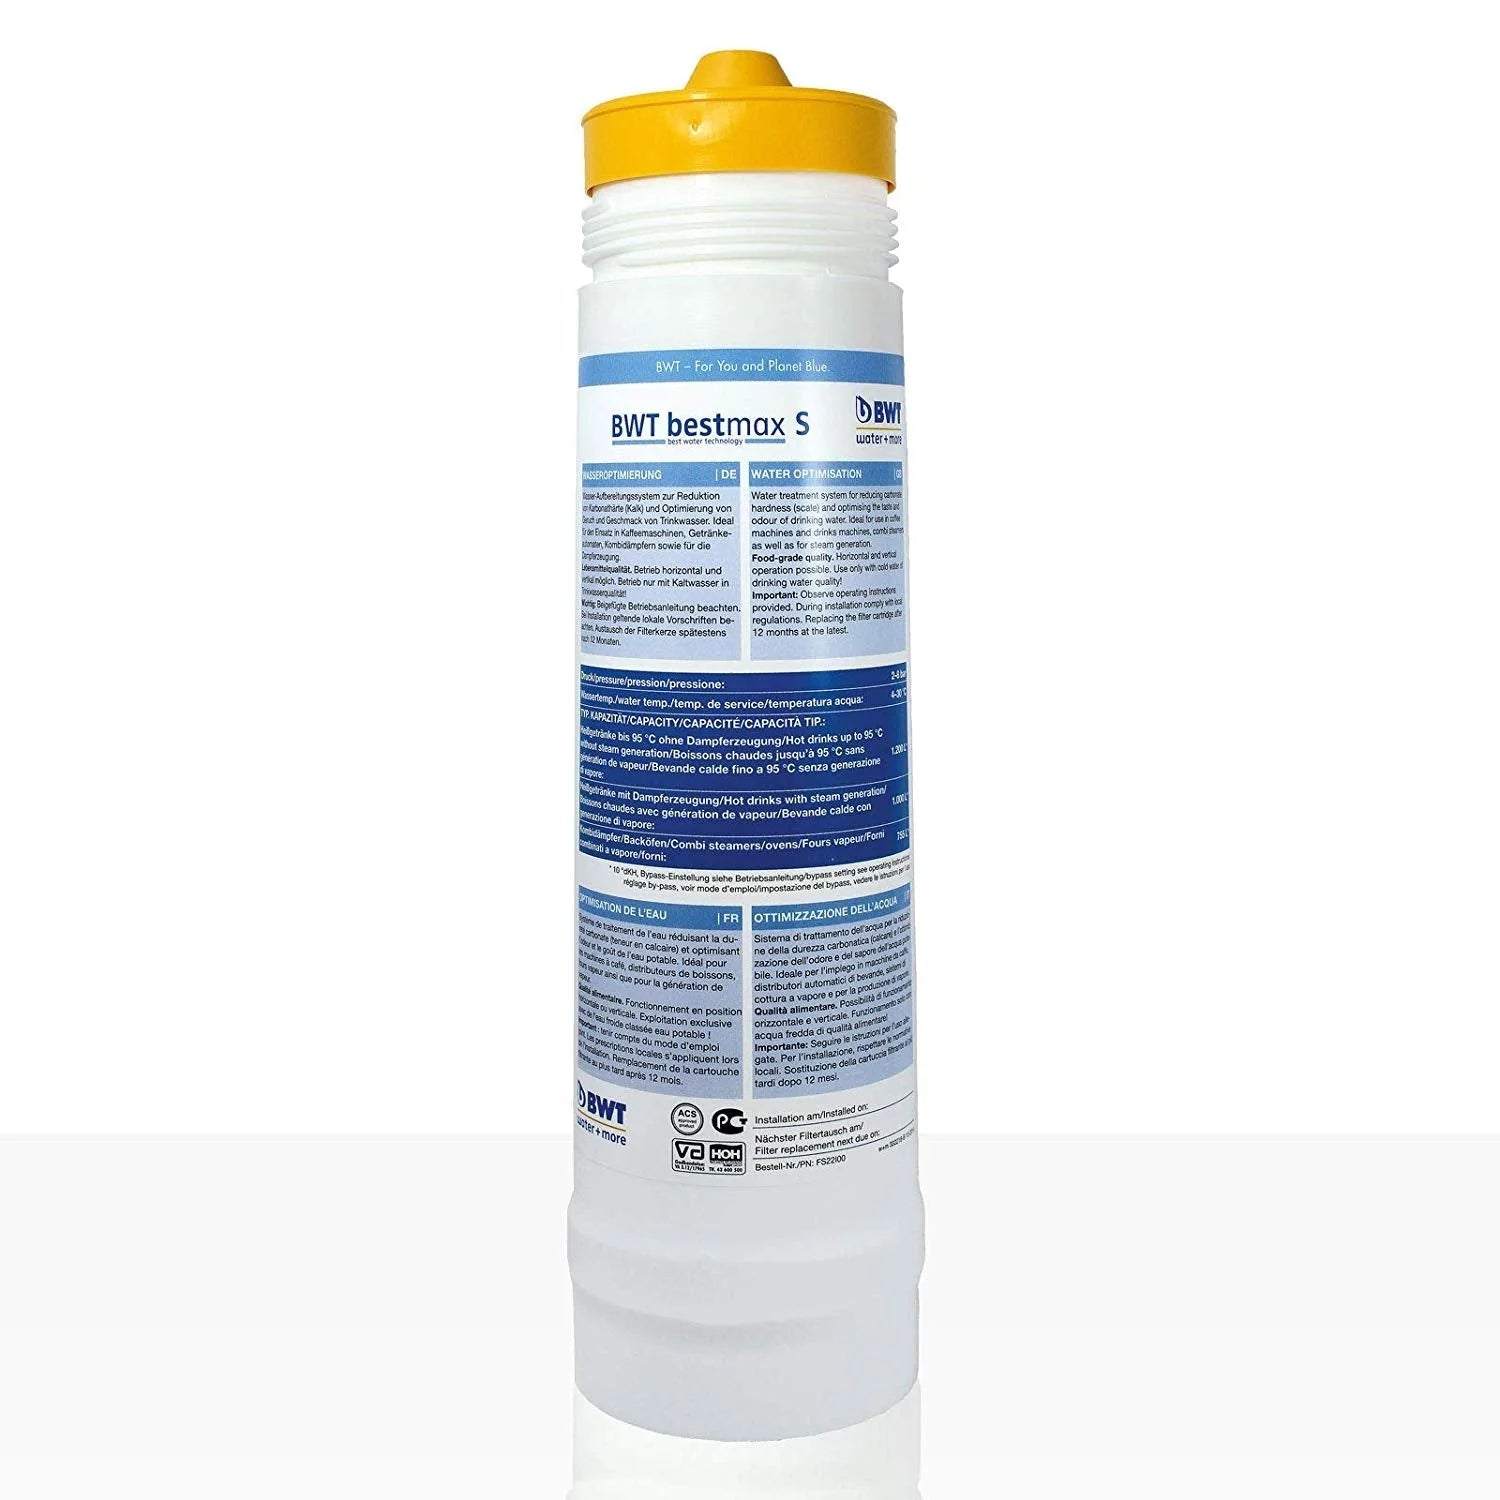 Water filtration kit